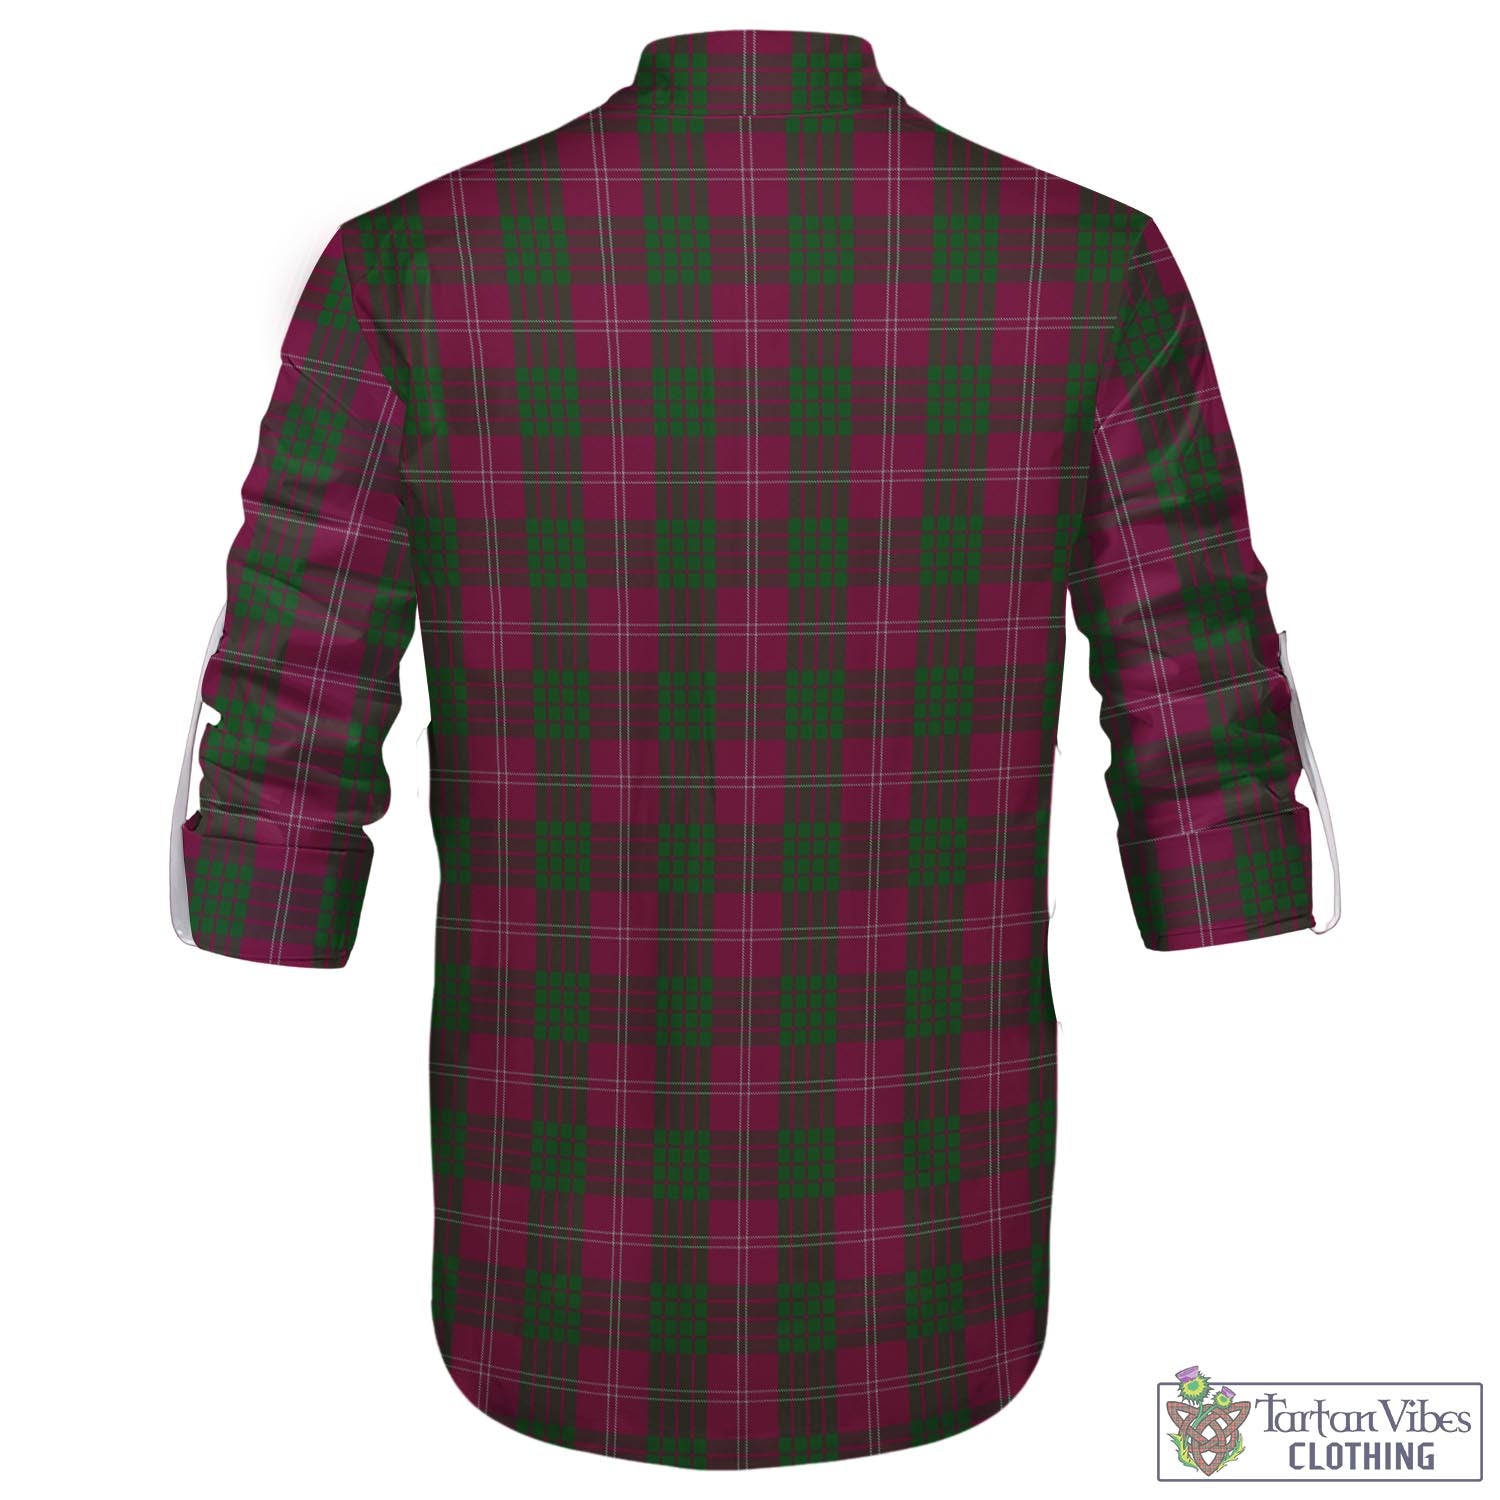 Tartan Vibes Clothing Crawford Tartan Men's Scottish Traditional Jacobite Ghillie Kilt Shirt with Family Crest